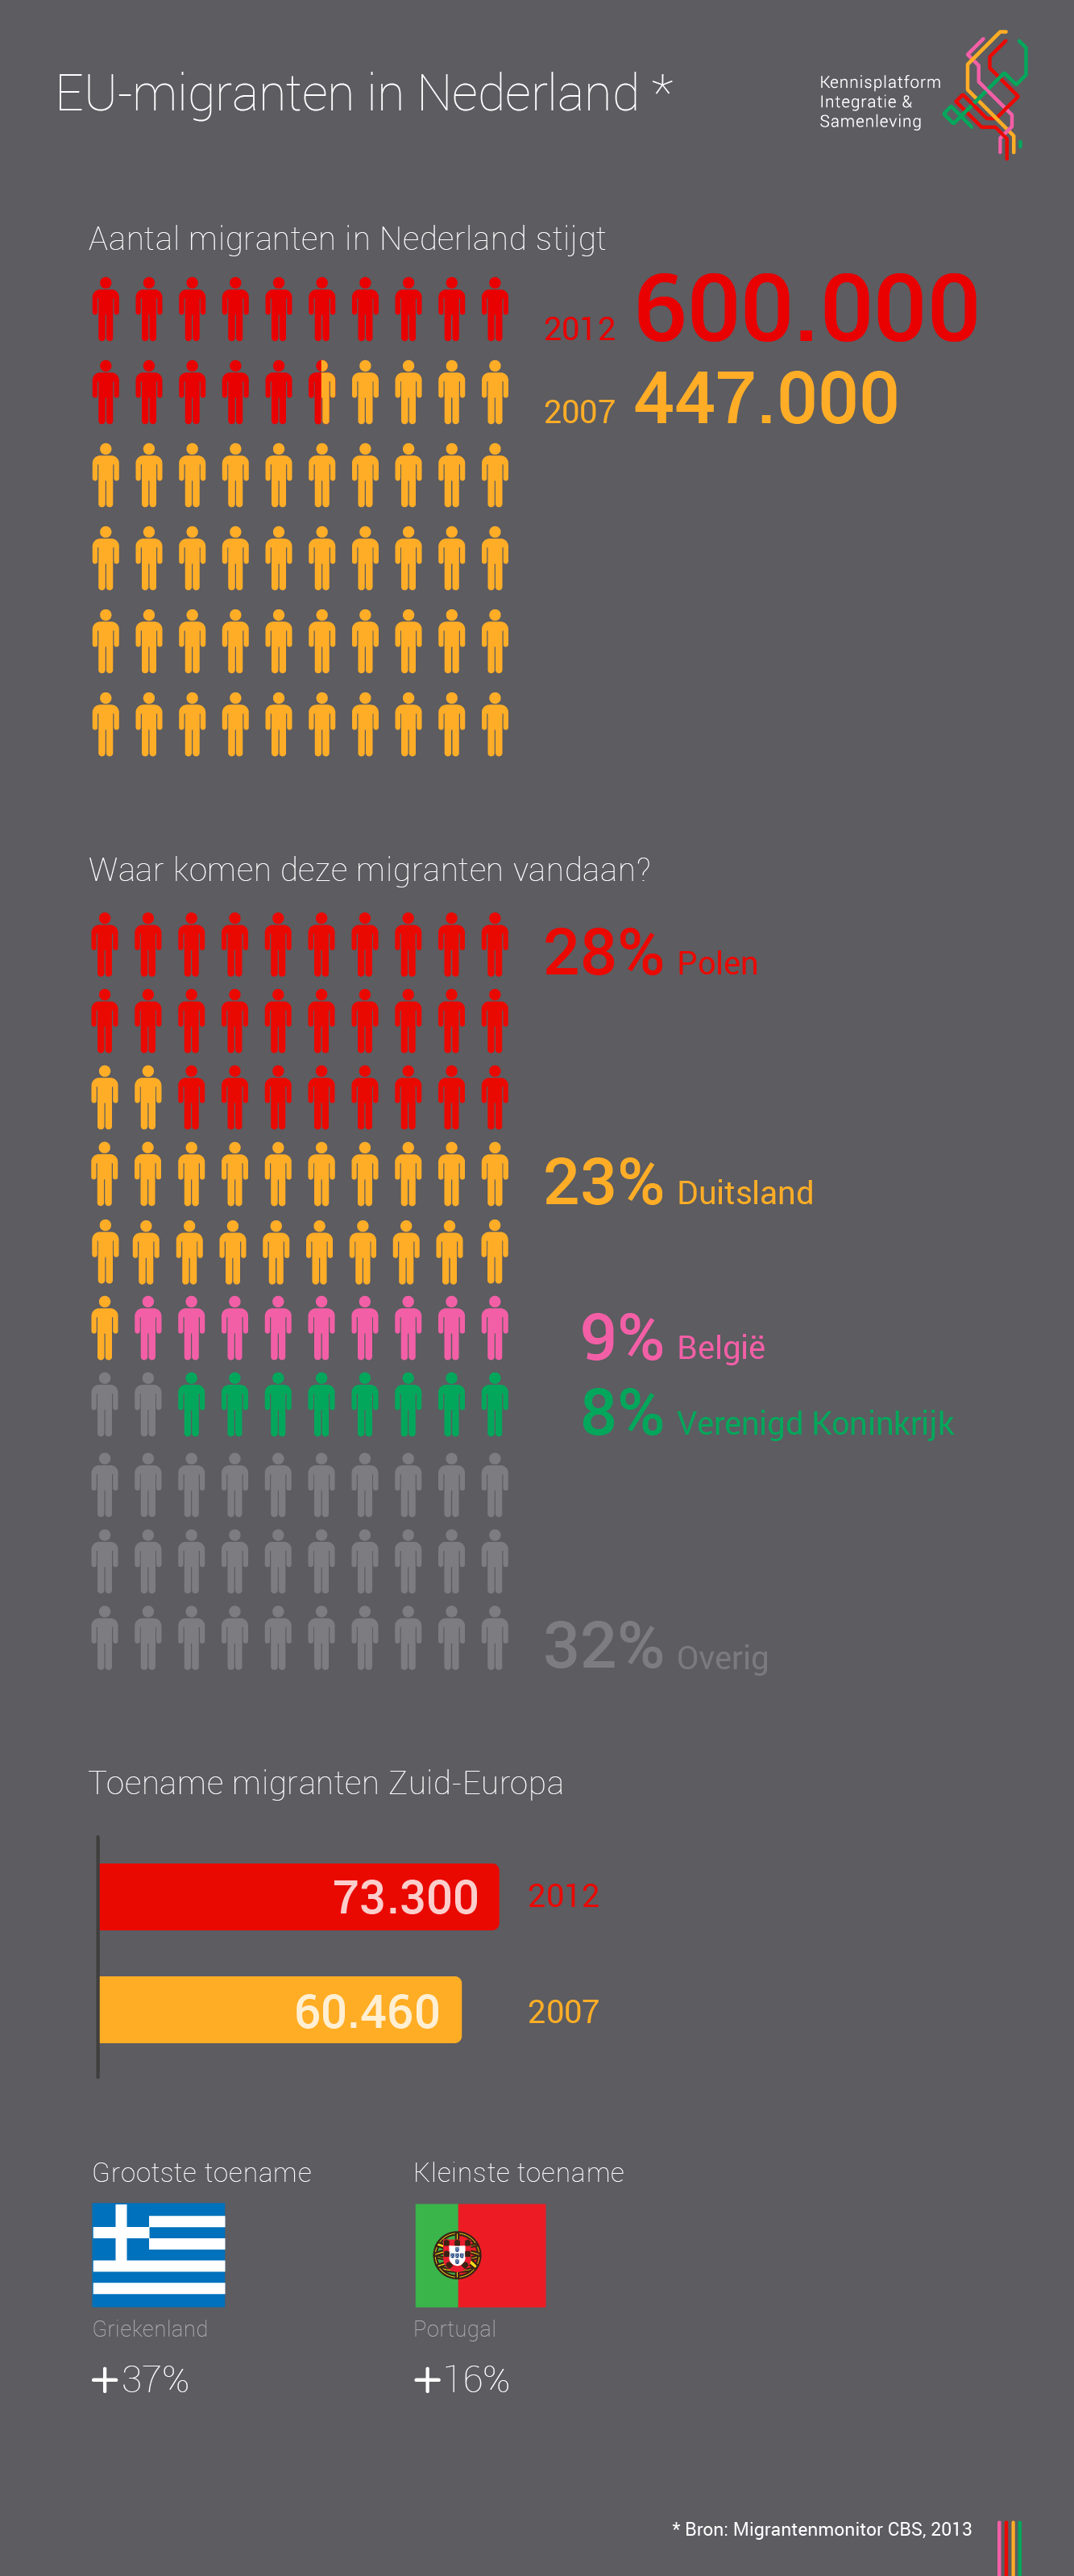 Infographic EU-migranten